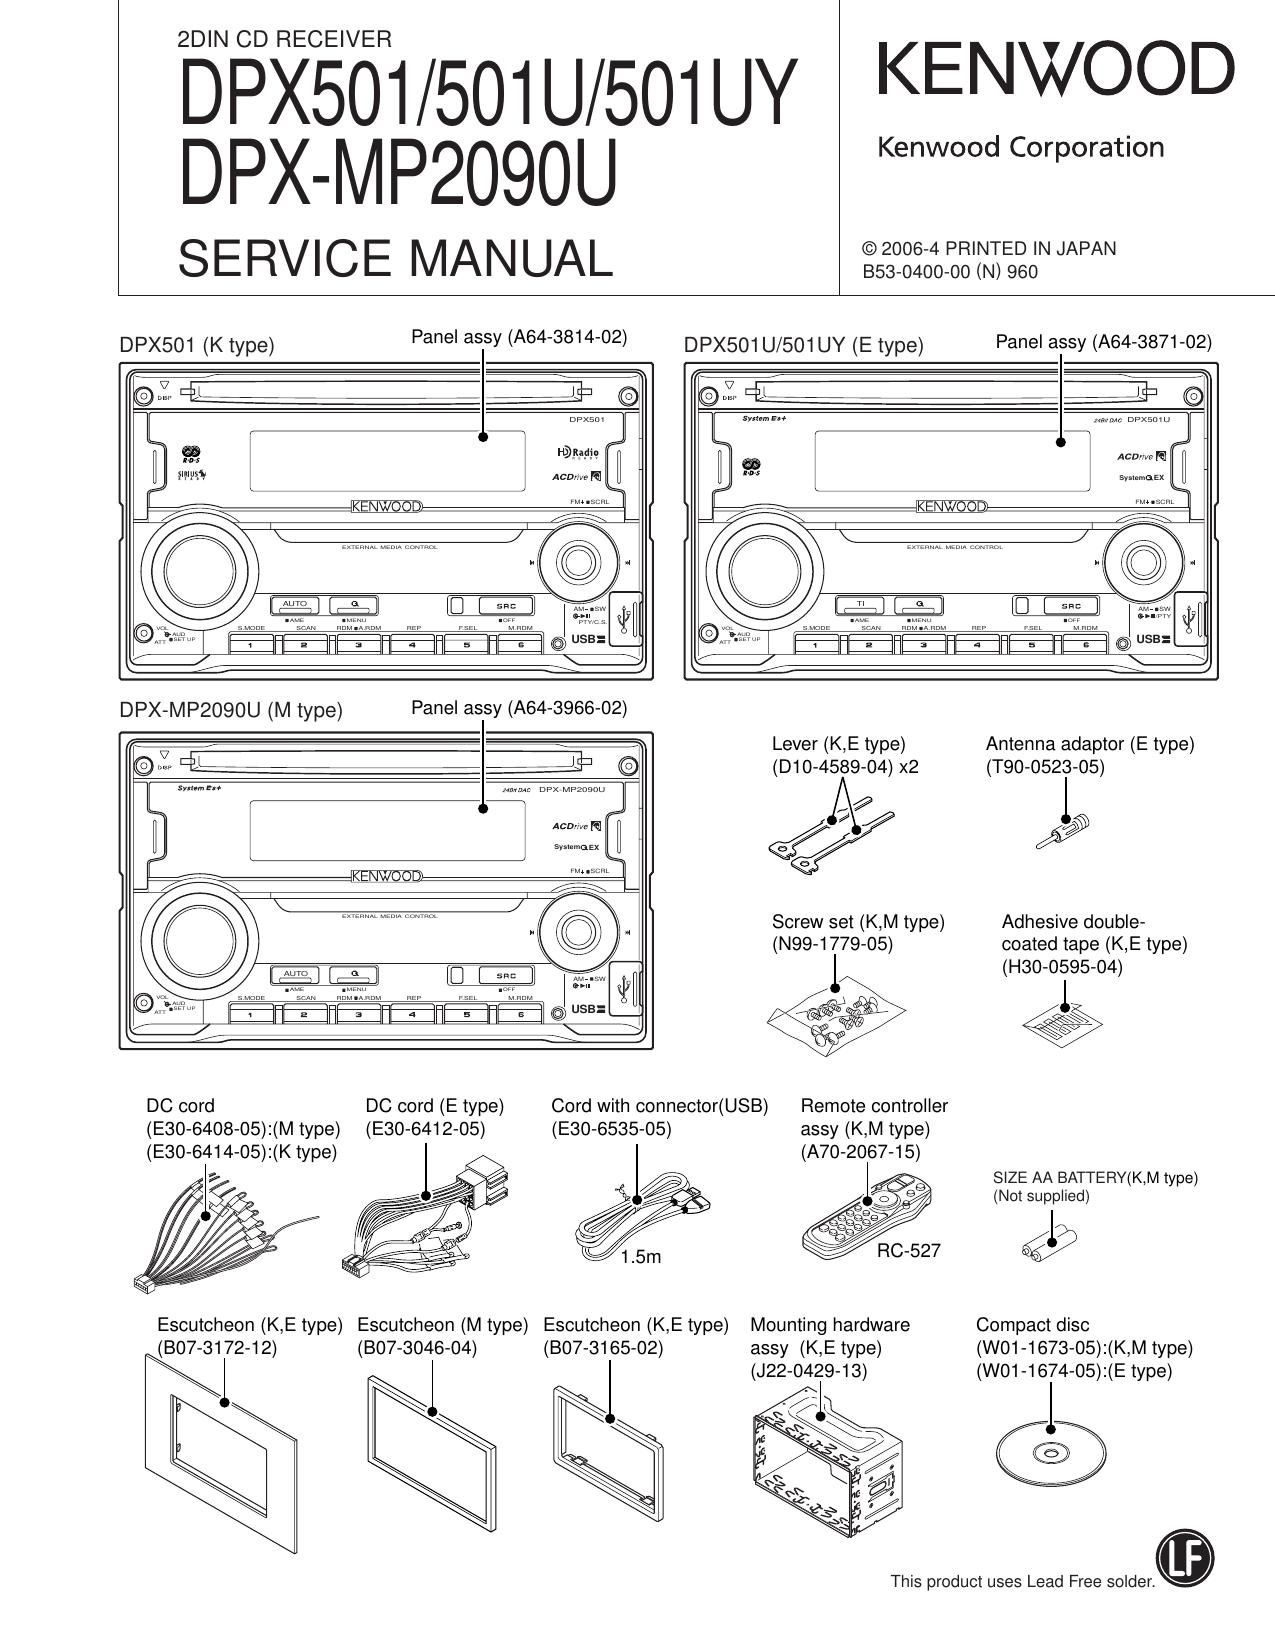 Kenwood DPX 501 UY Service Manual